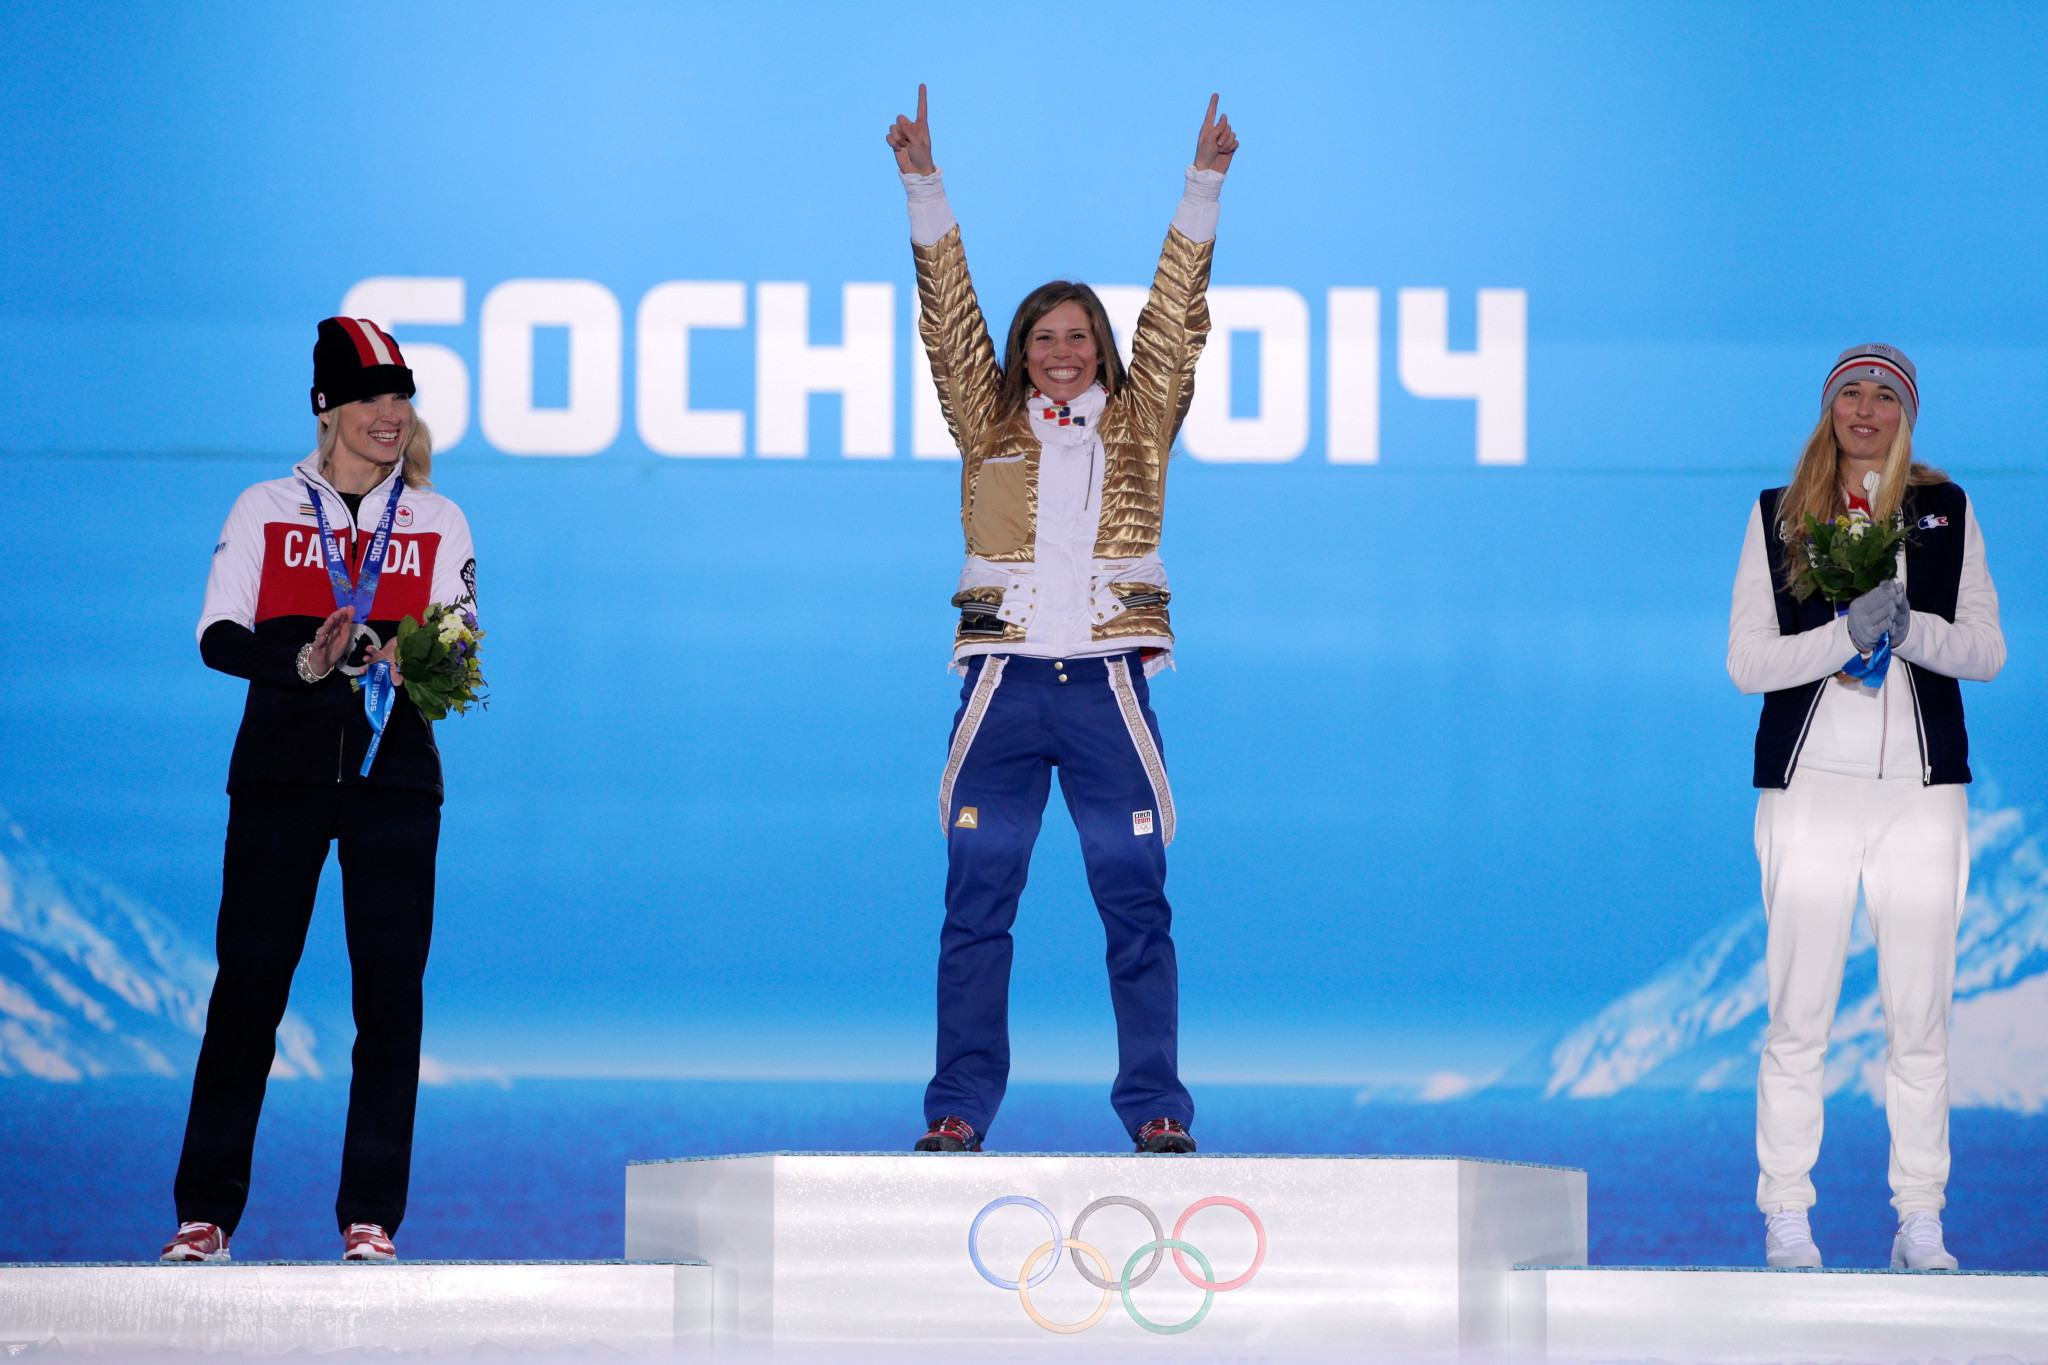 Eva Samková claimed snowboard cross gold at Sochi 2014 ©Getty Images